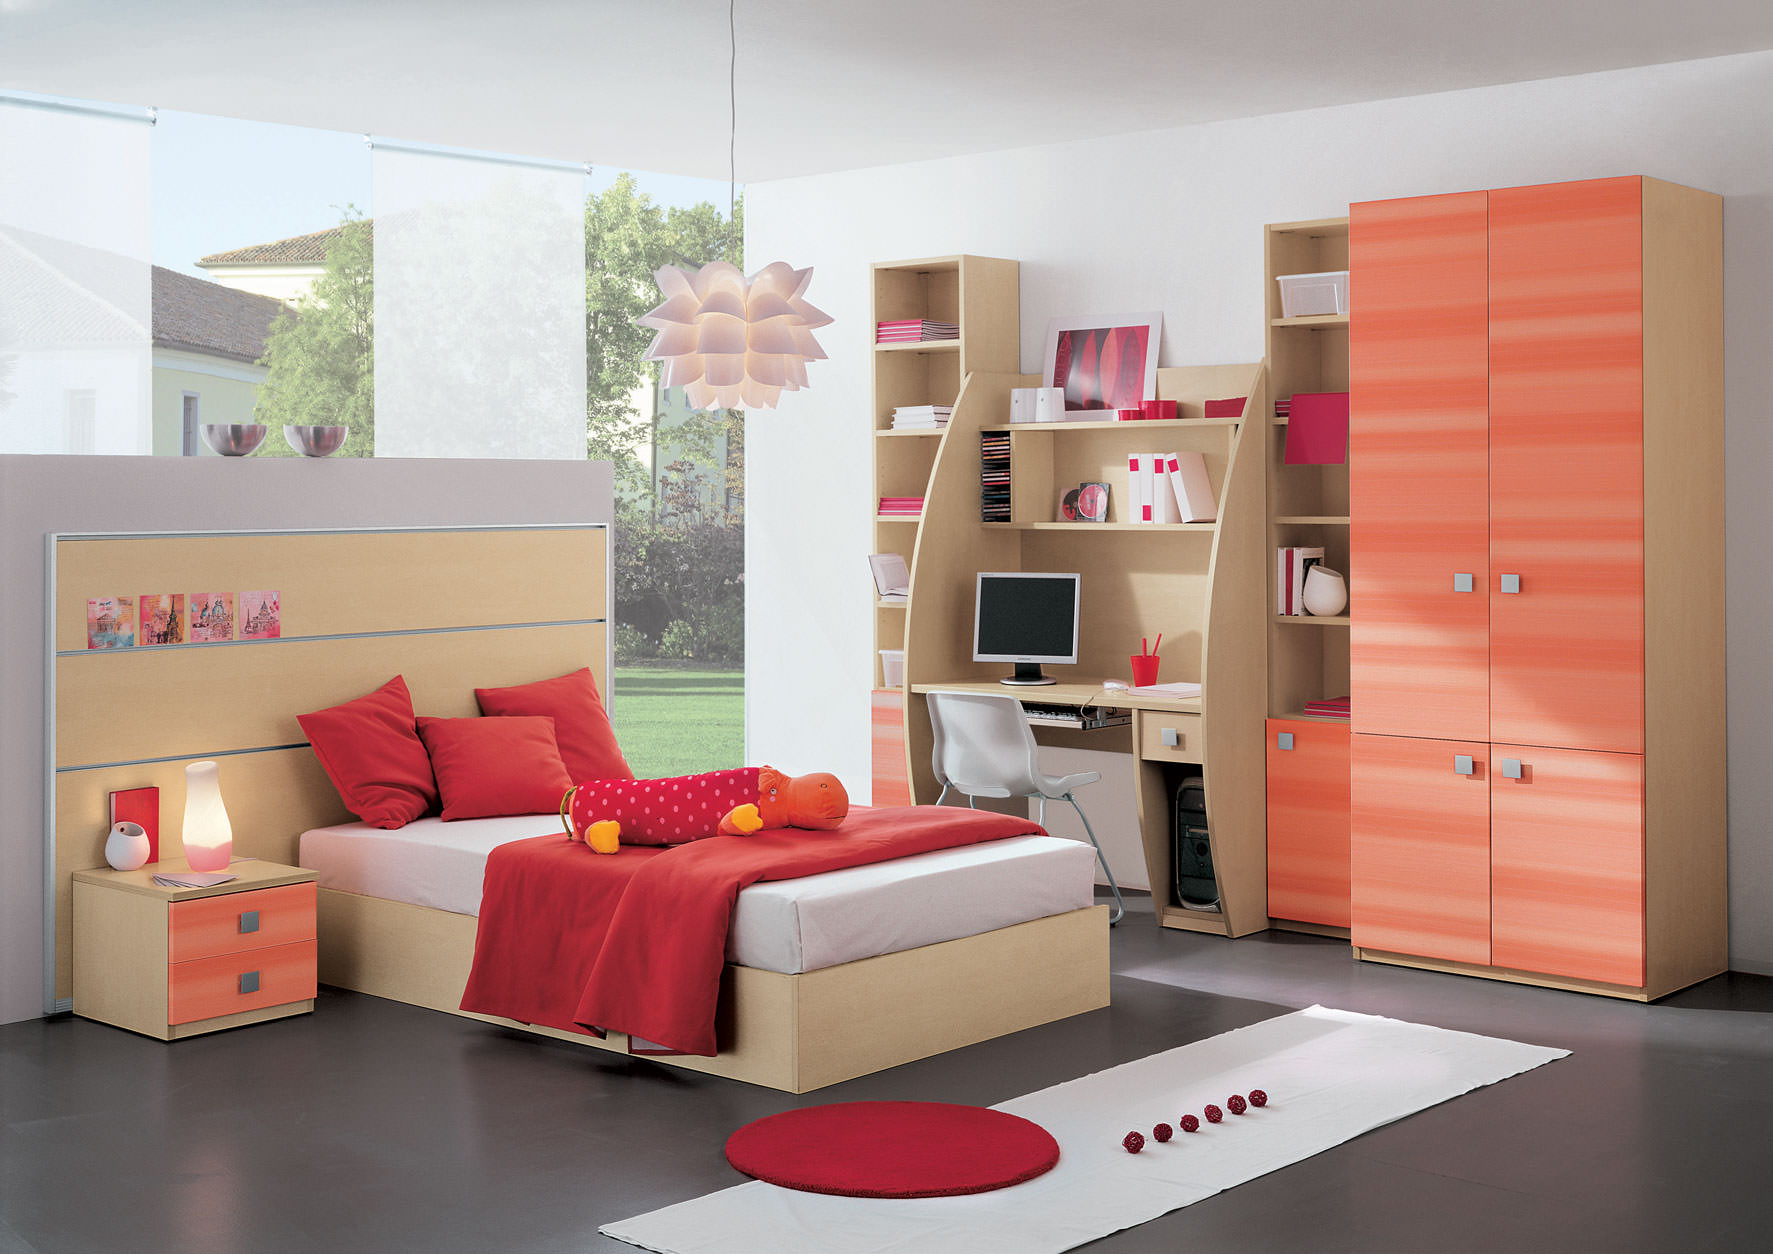 12+ Kids’ Room Modern Interior Designs, Ideas | Design Trends - Premium PSD, Vector Downloads